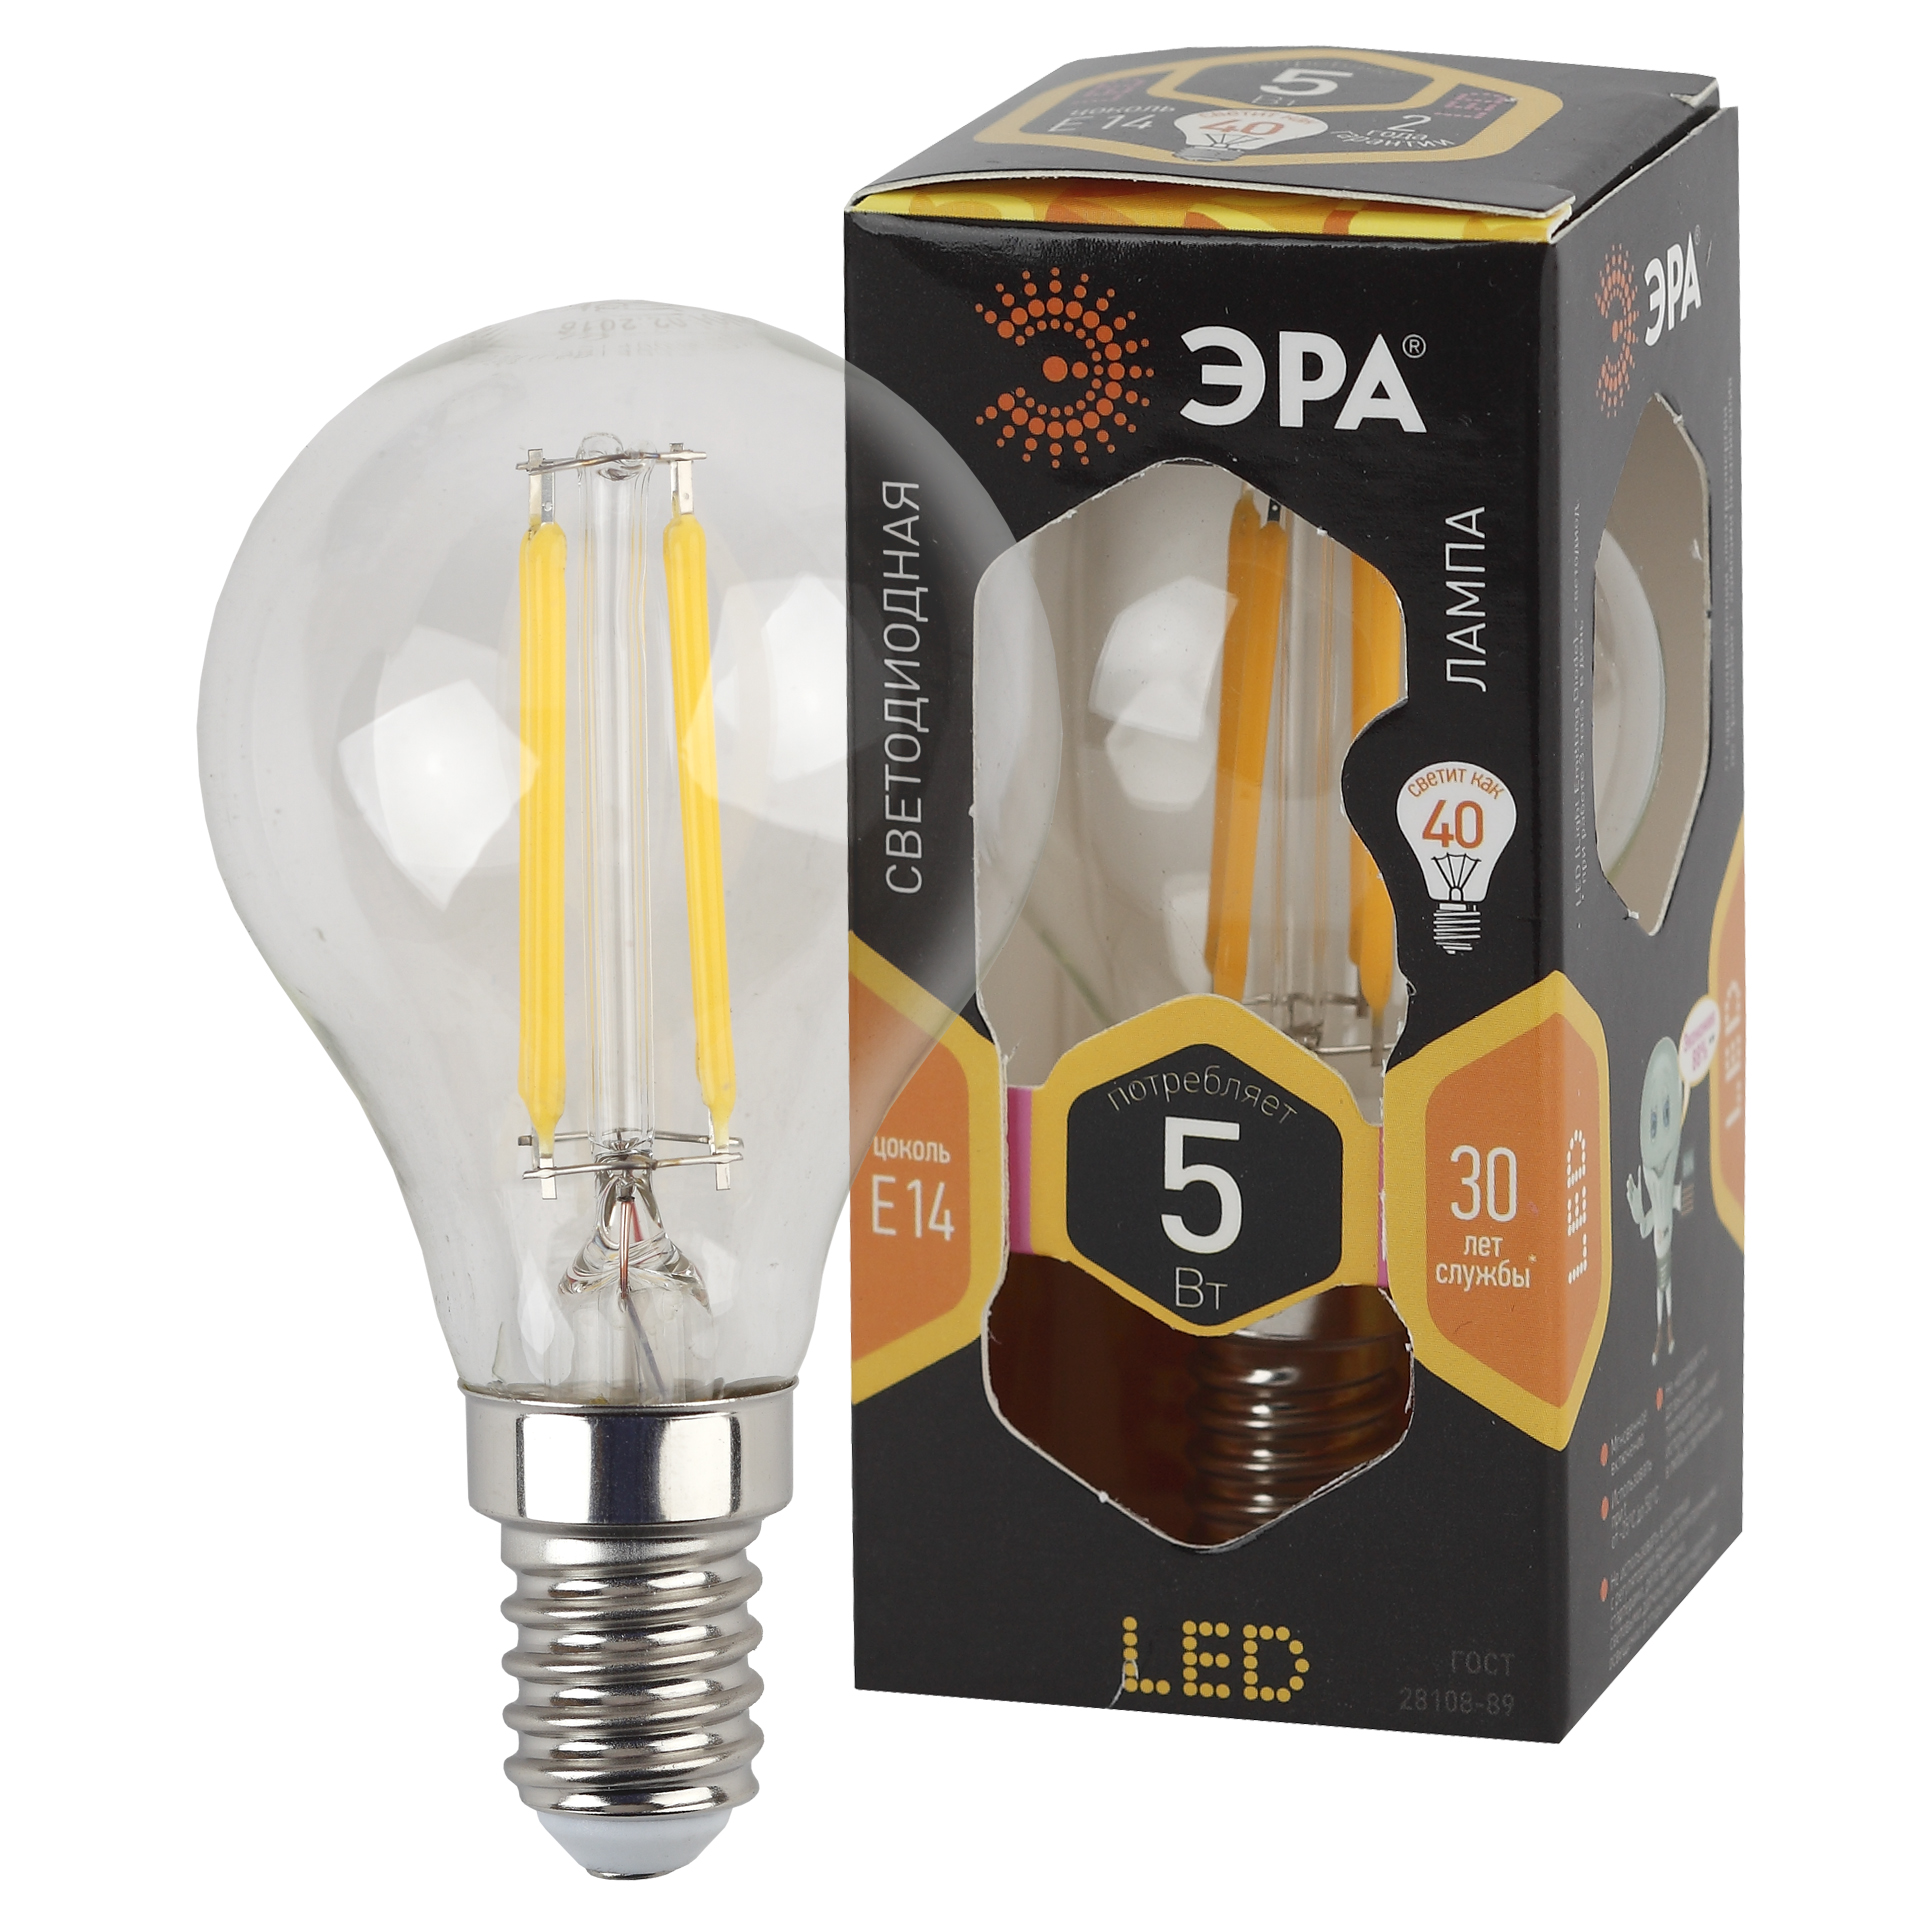 F-LED P45-5W-827-E14 ЭРА (филамент, шар, 5Вт, тепл, E14) (10/100/3000)